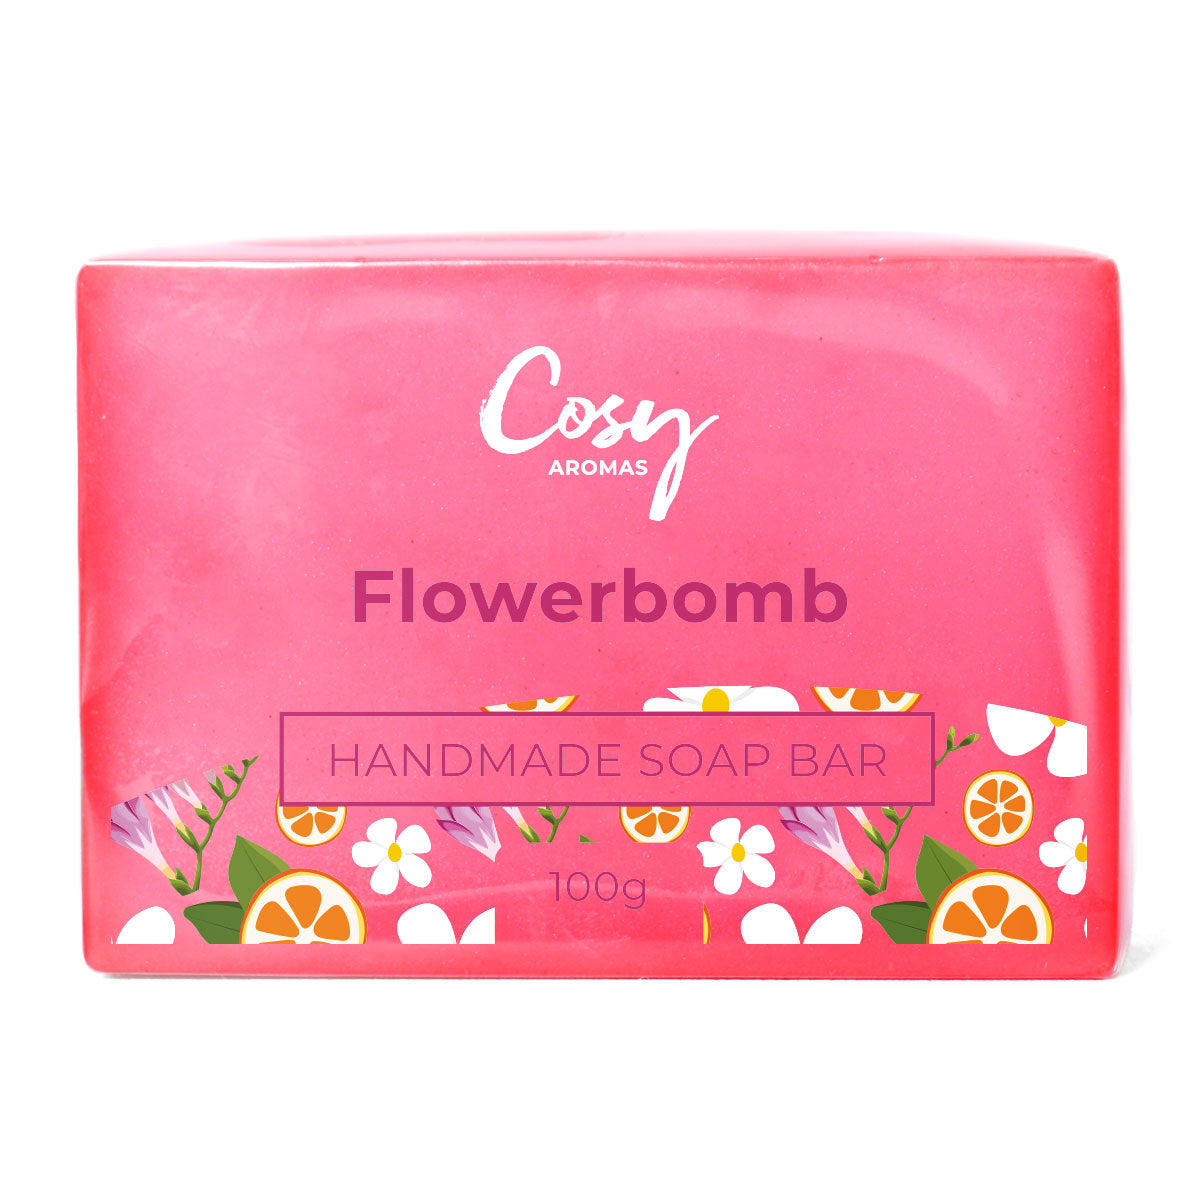 Flowerbomb Handmade Soap Bar